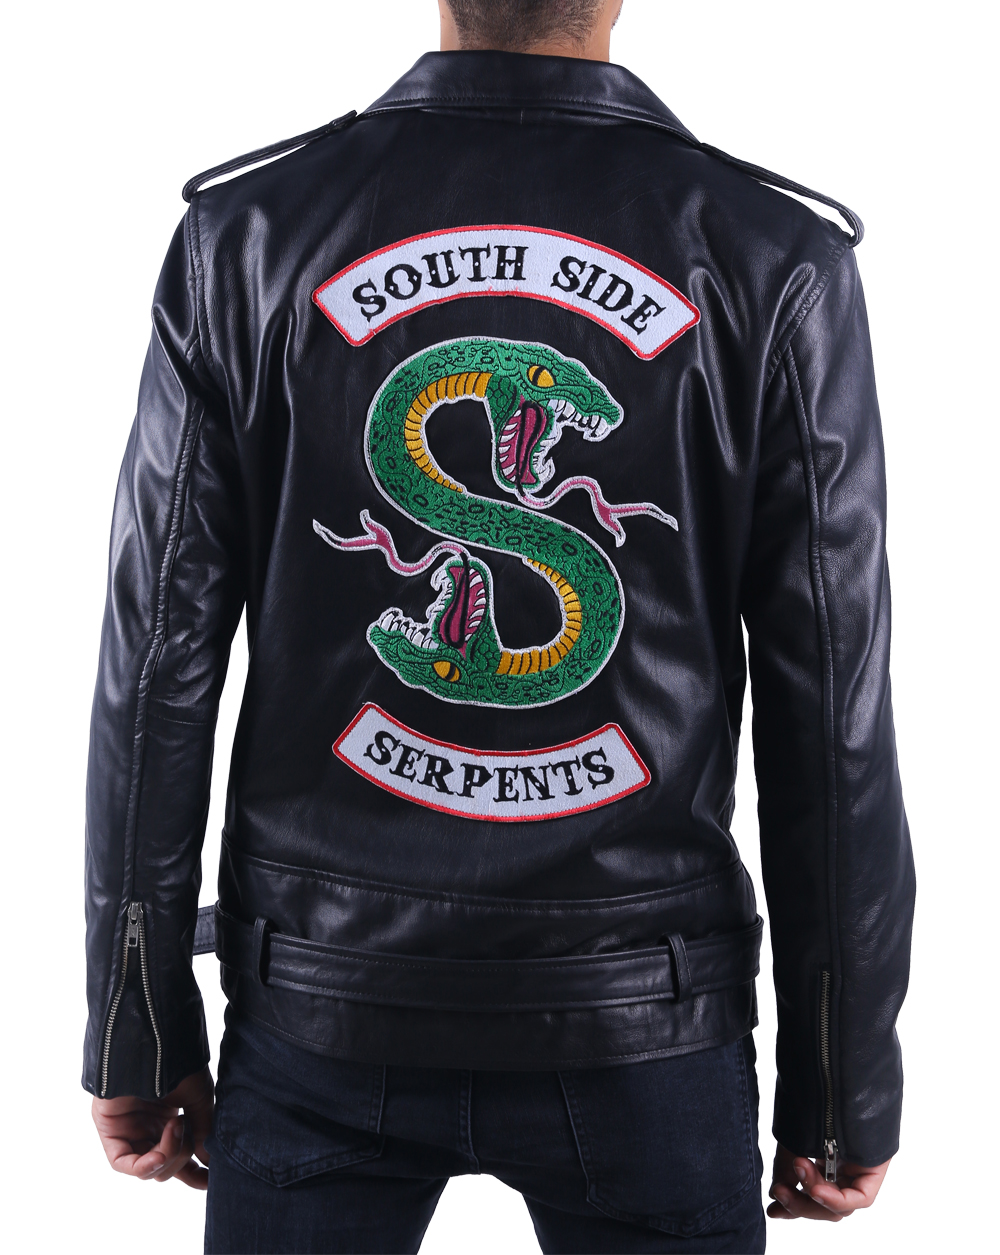 SSS southside serpents jacket